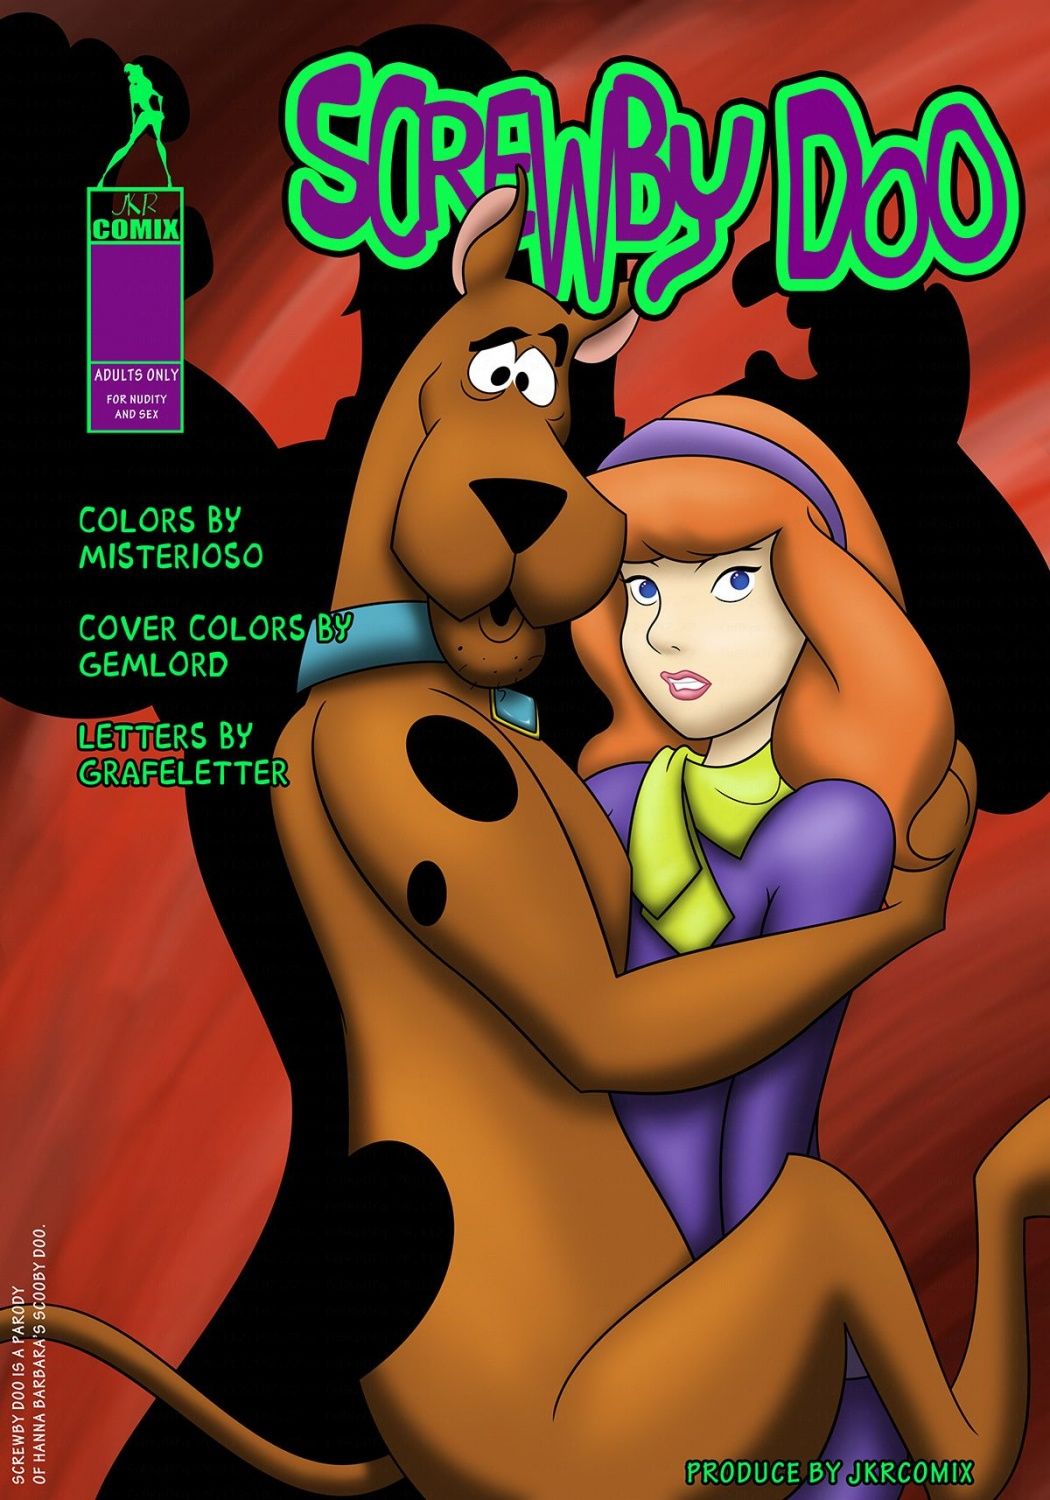 JKRComix - Screwby Doo, Scooby Cartoon page 1